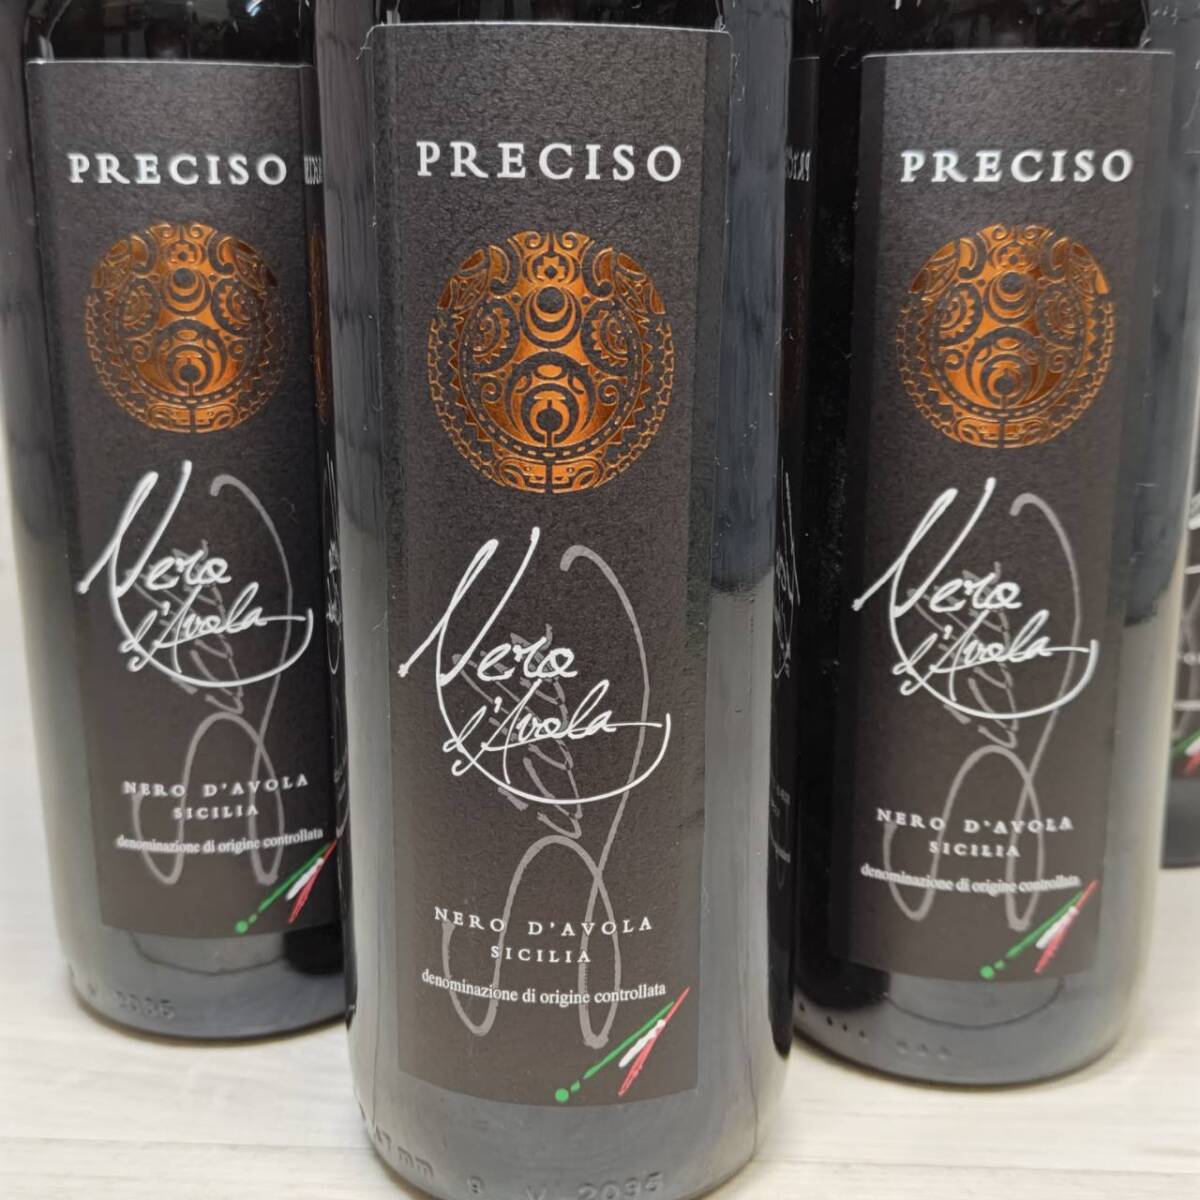 [YH-8992] не . штекер pre si-so* Nero *da-vola красный вино 750ml 6 шт. комплект Италия производство 